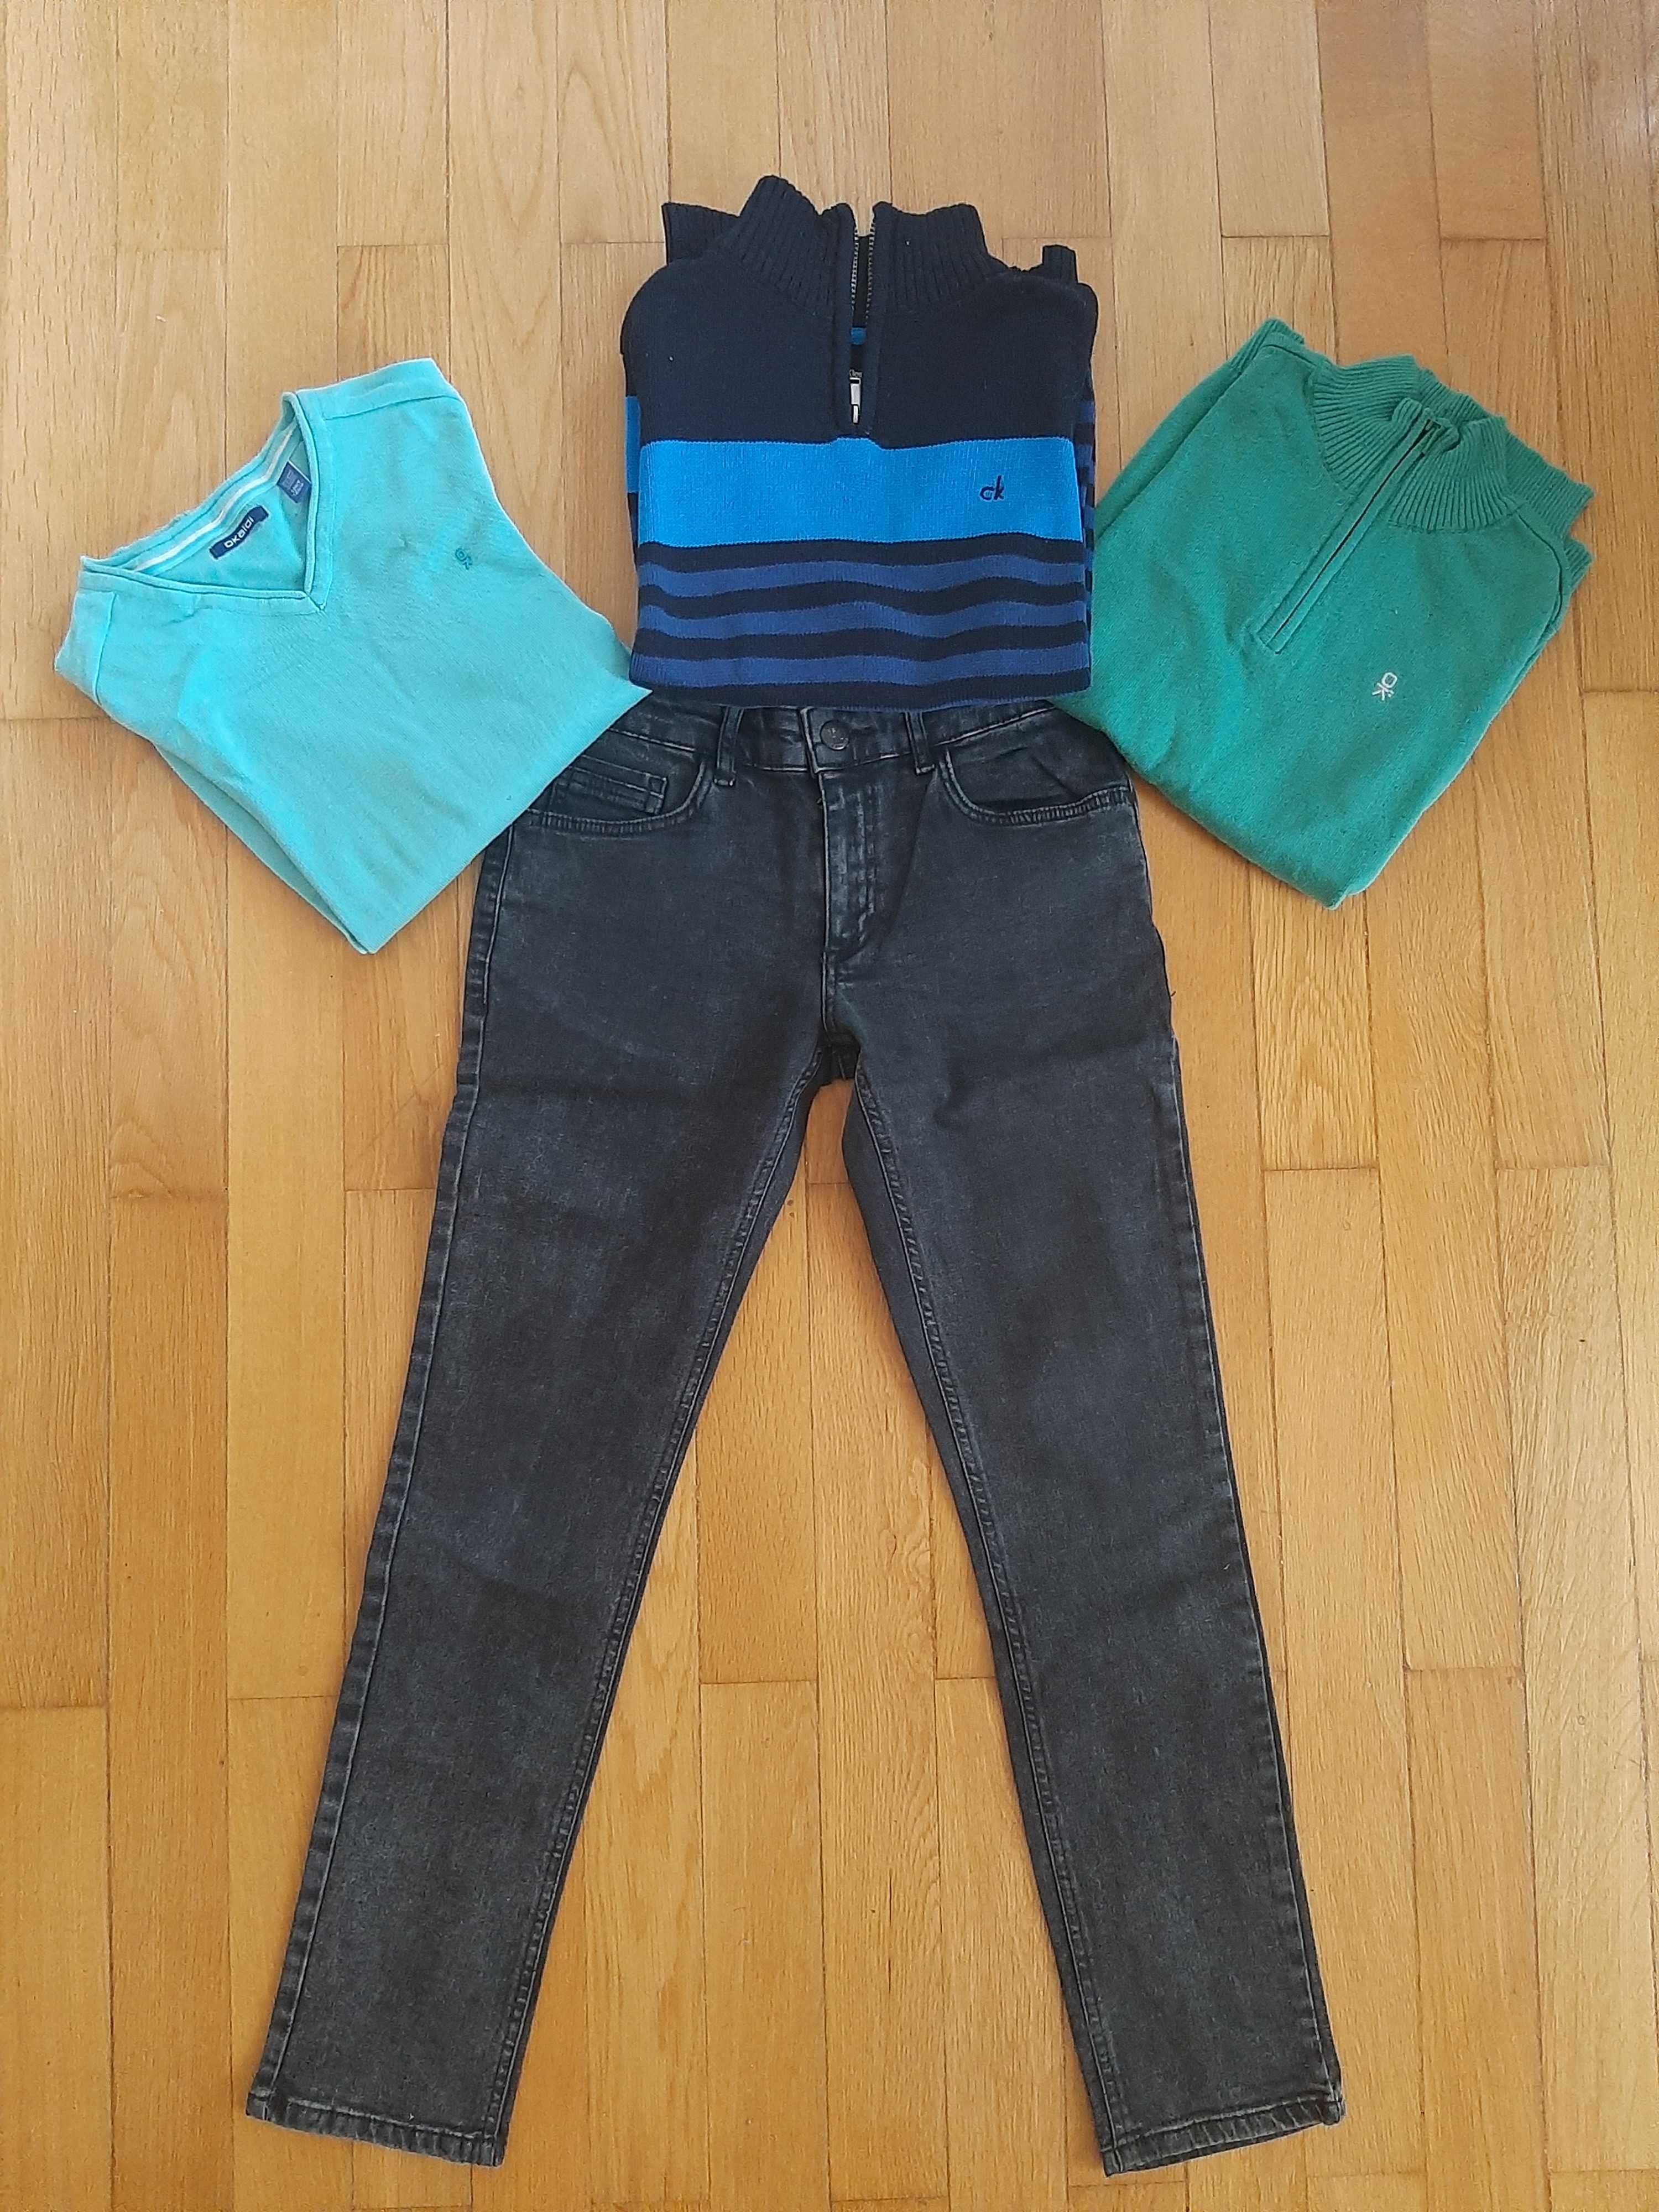 Суитшърт Propeller,блуза DKNY,пуловери CK,Оkaidi, дънки за 12 г.момче